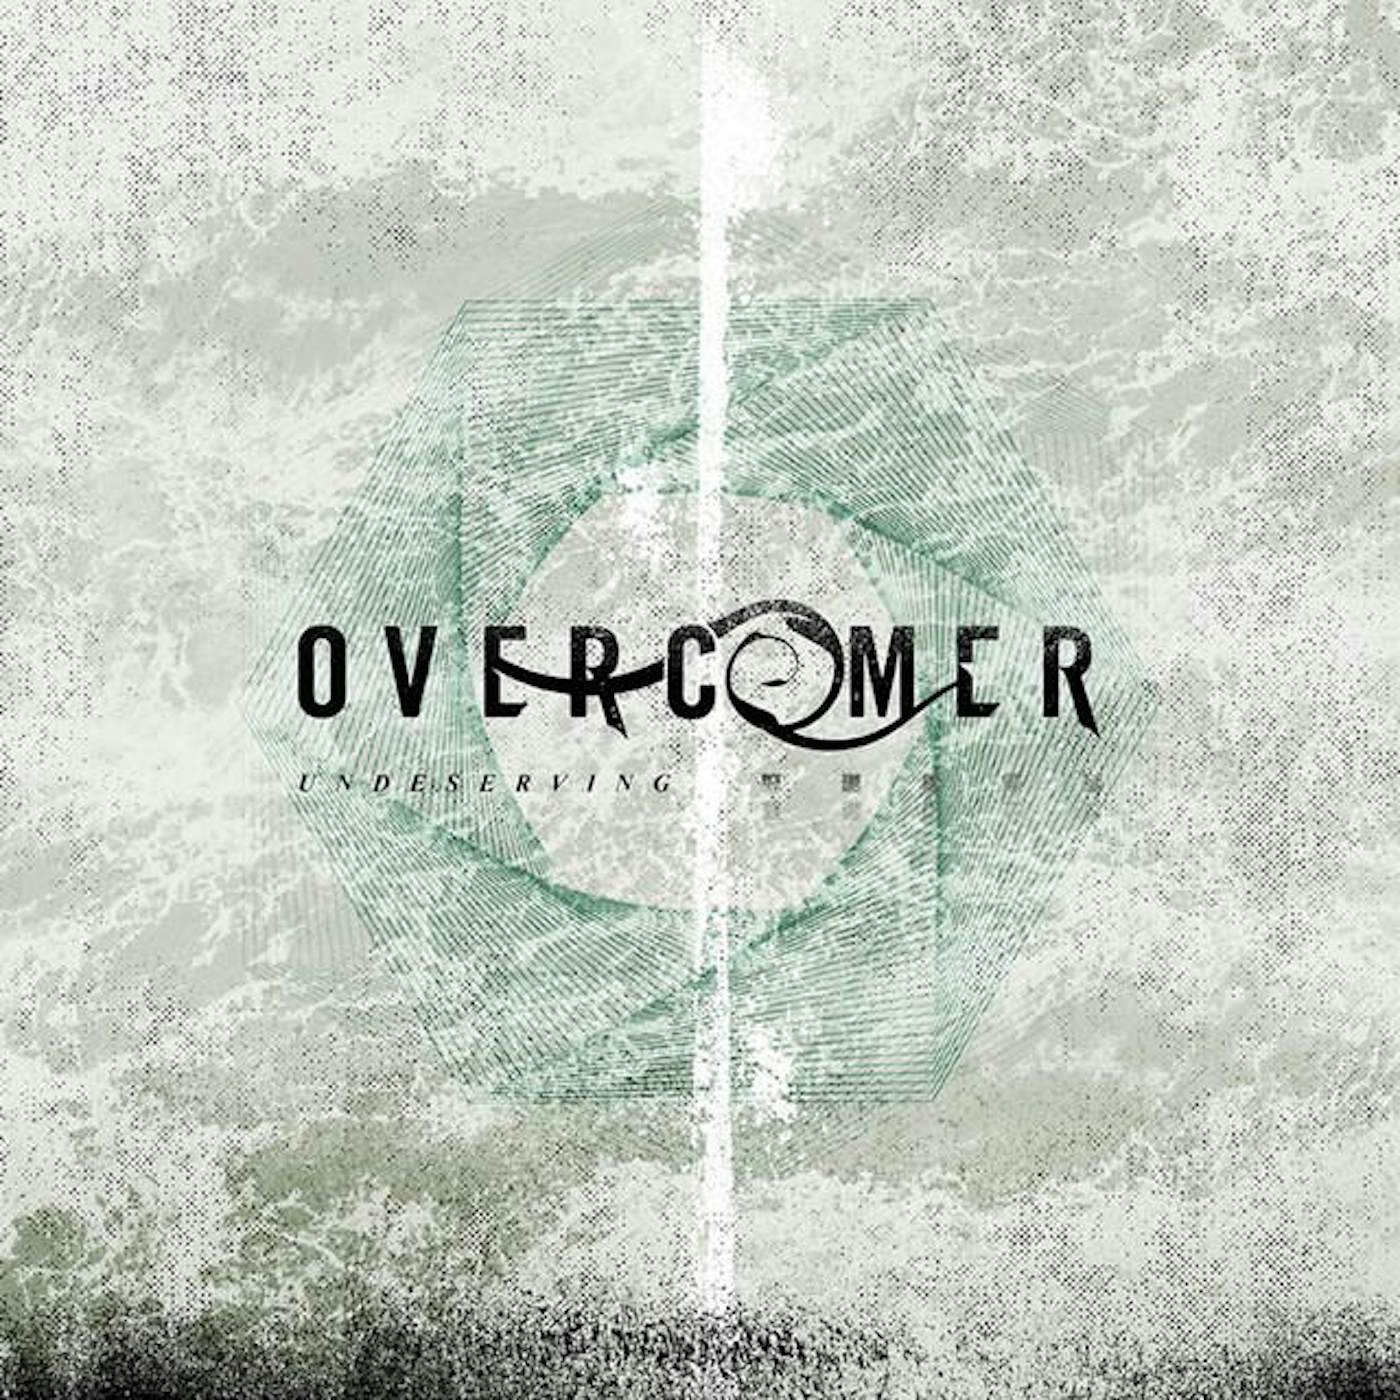 Overcomer